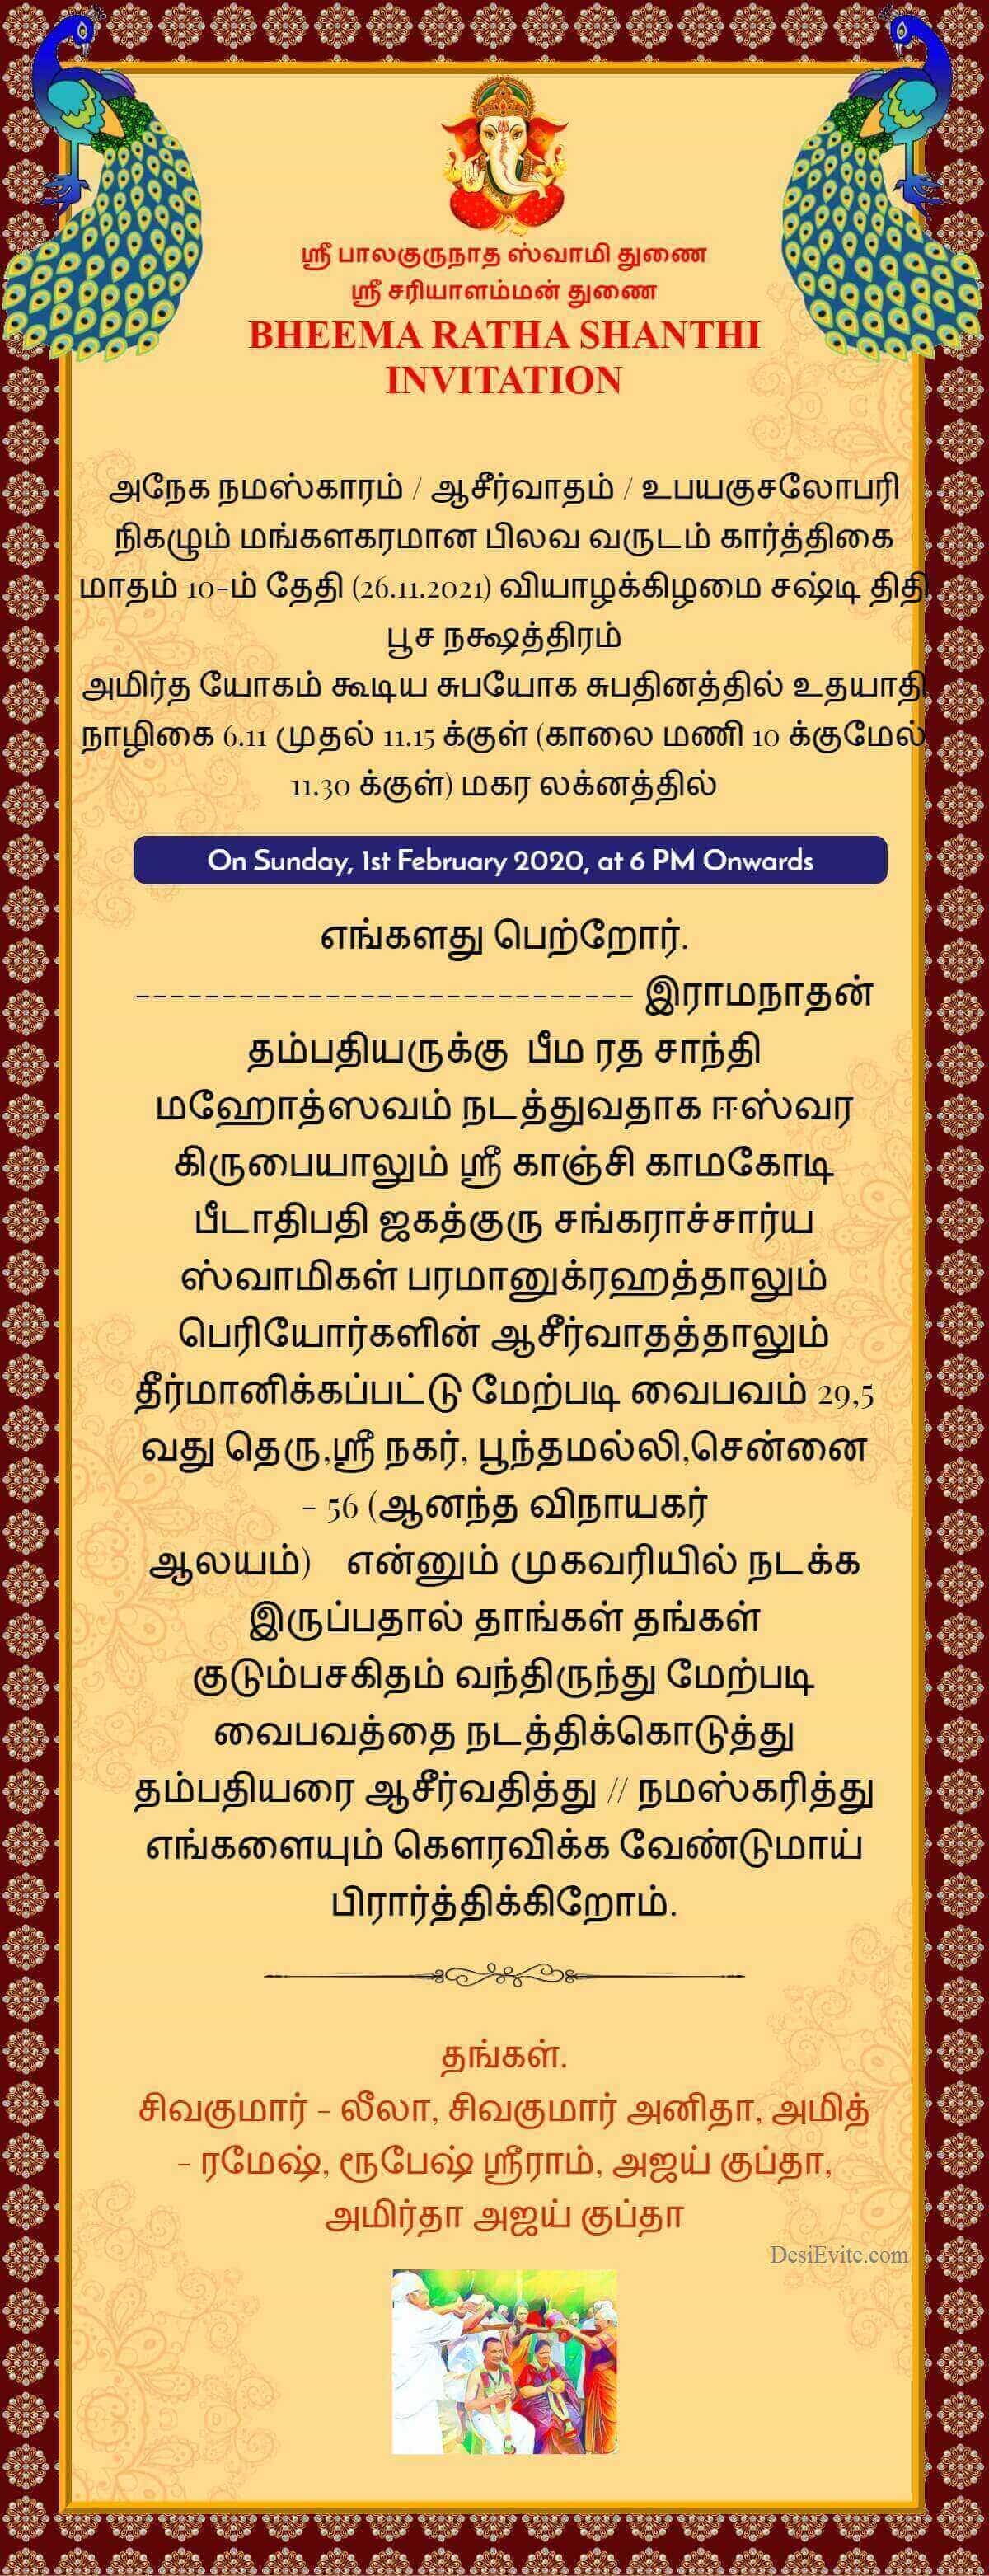 bheema ratha shanthi invitation card tamil template 98 